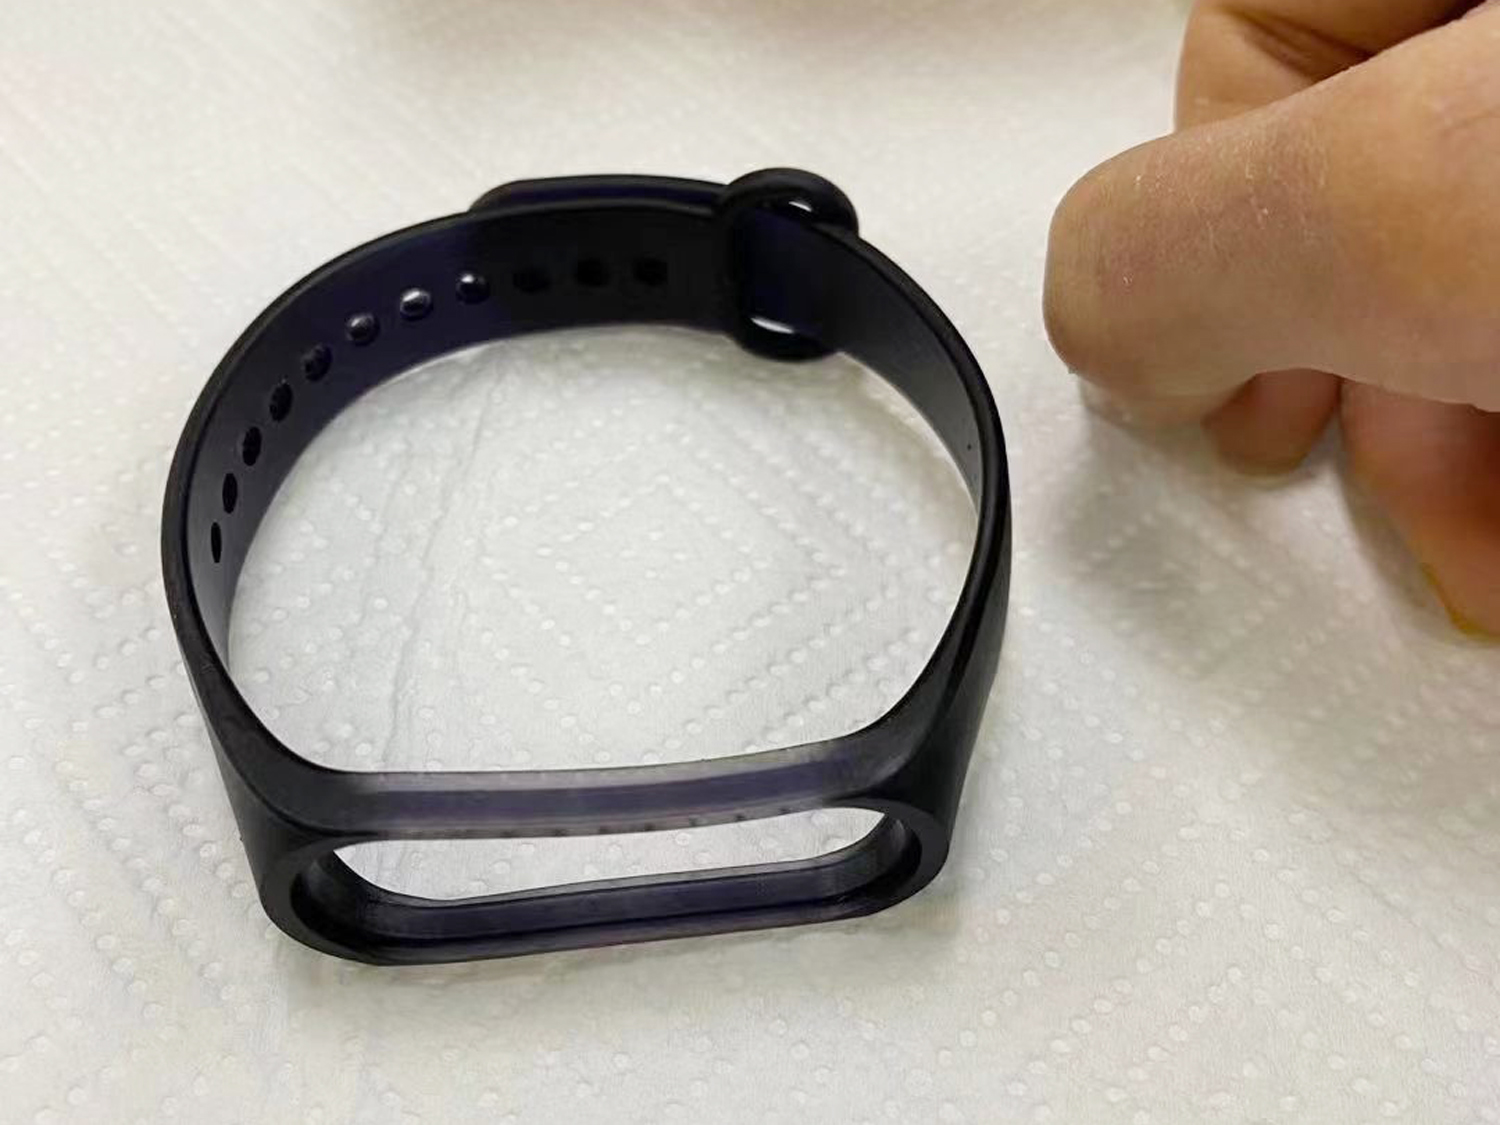 SLS 3D Printed TPU Wristband Model of Smart Watch - FacFox